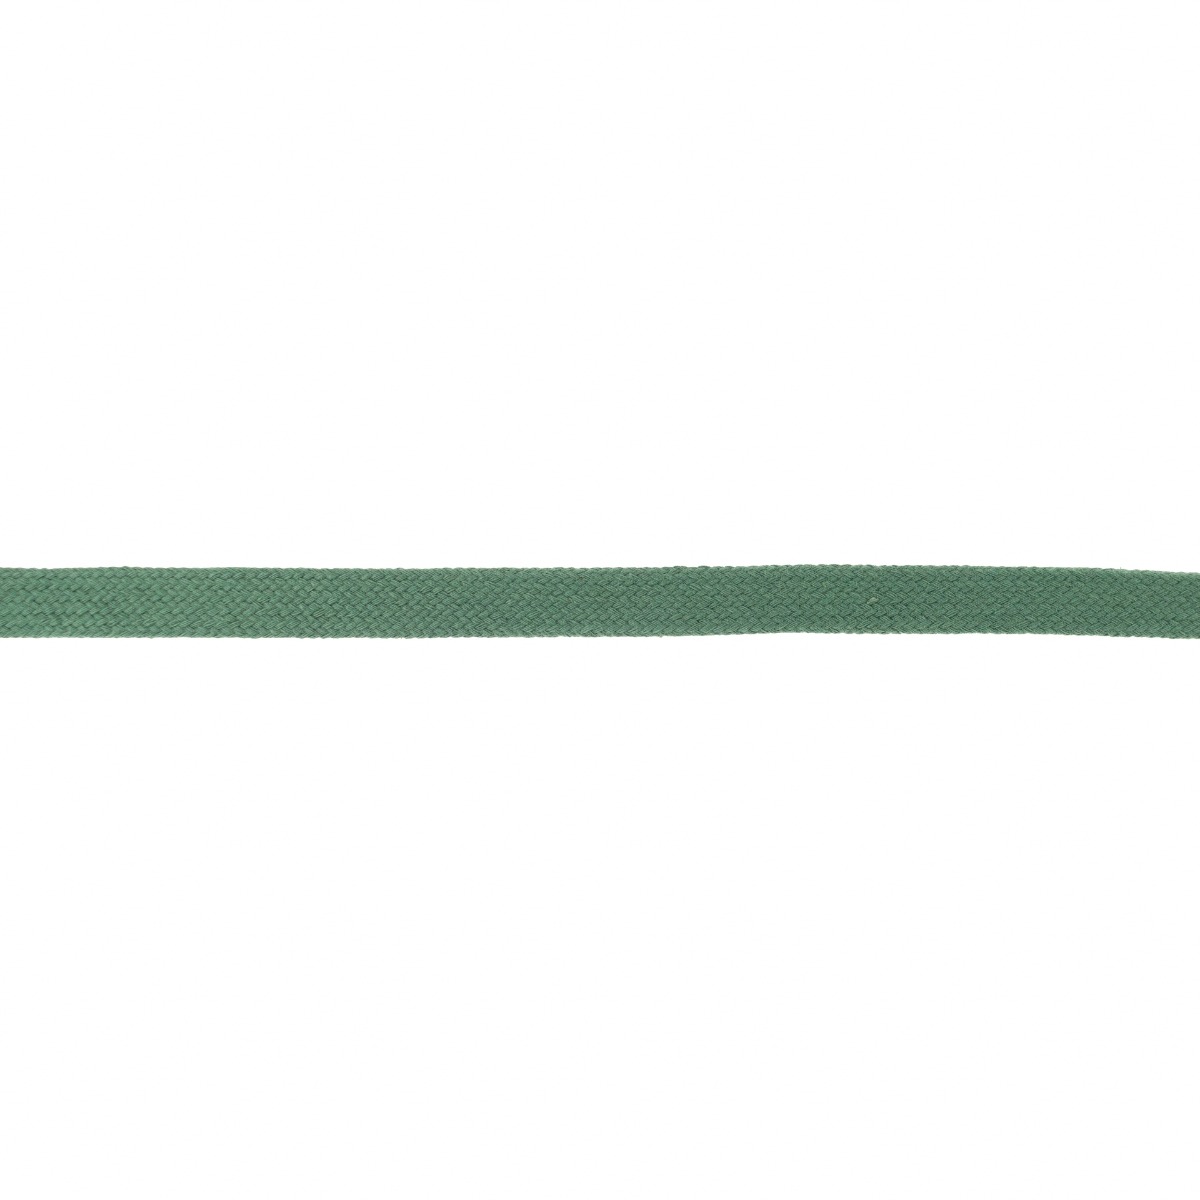 Hoodieband Kapuzenkordel 15 mm Old Green